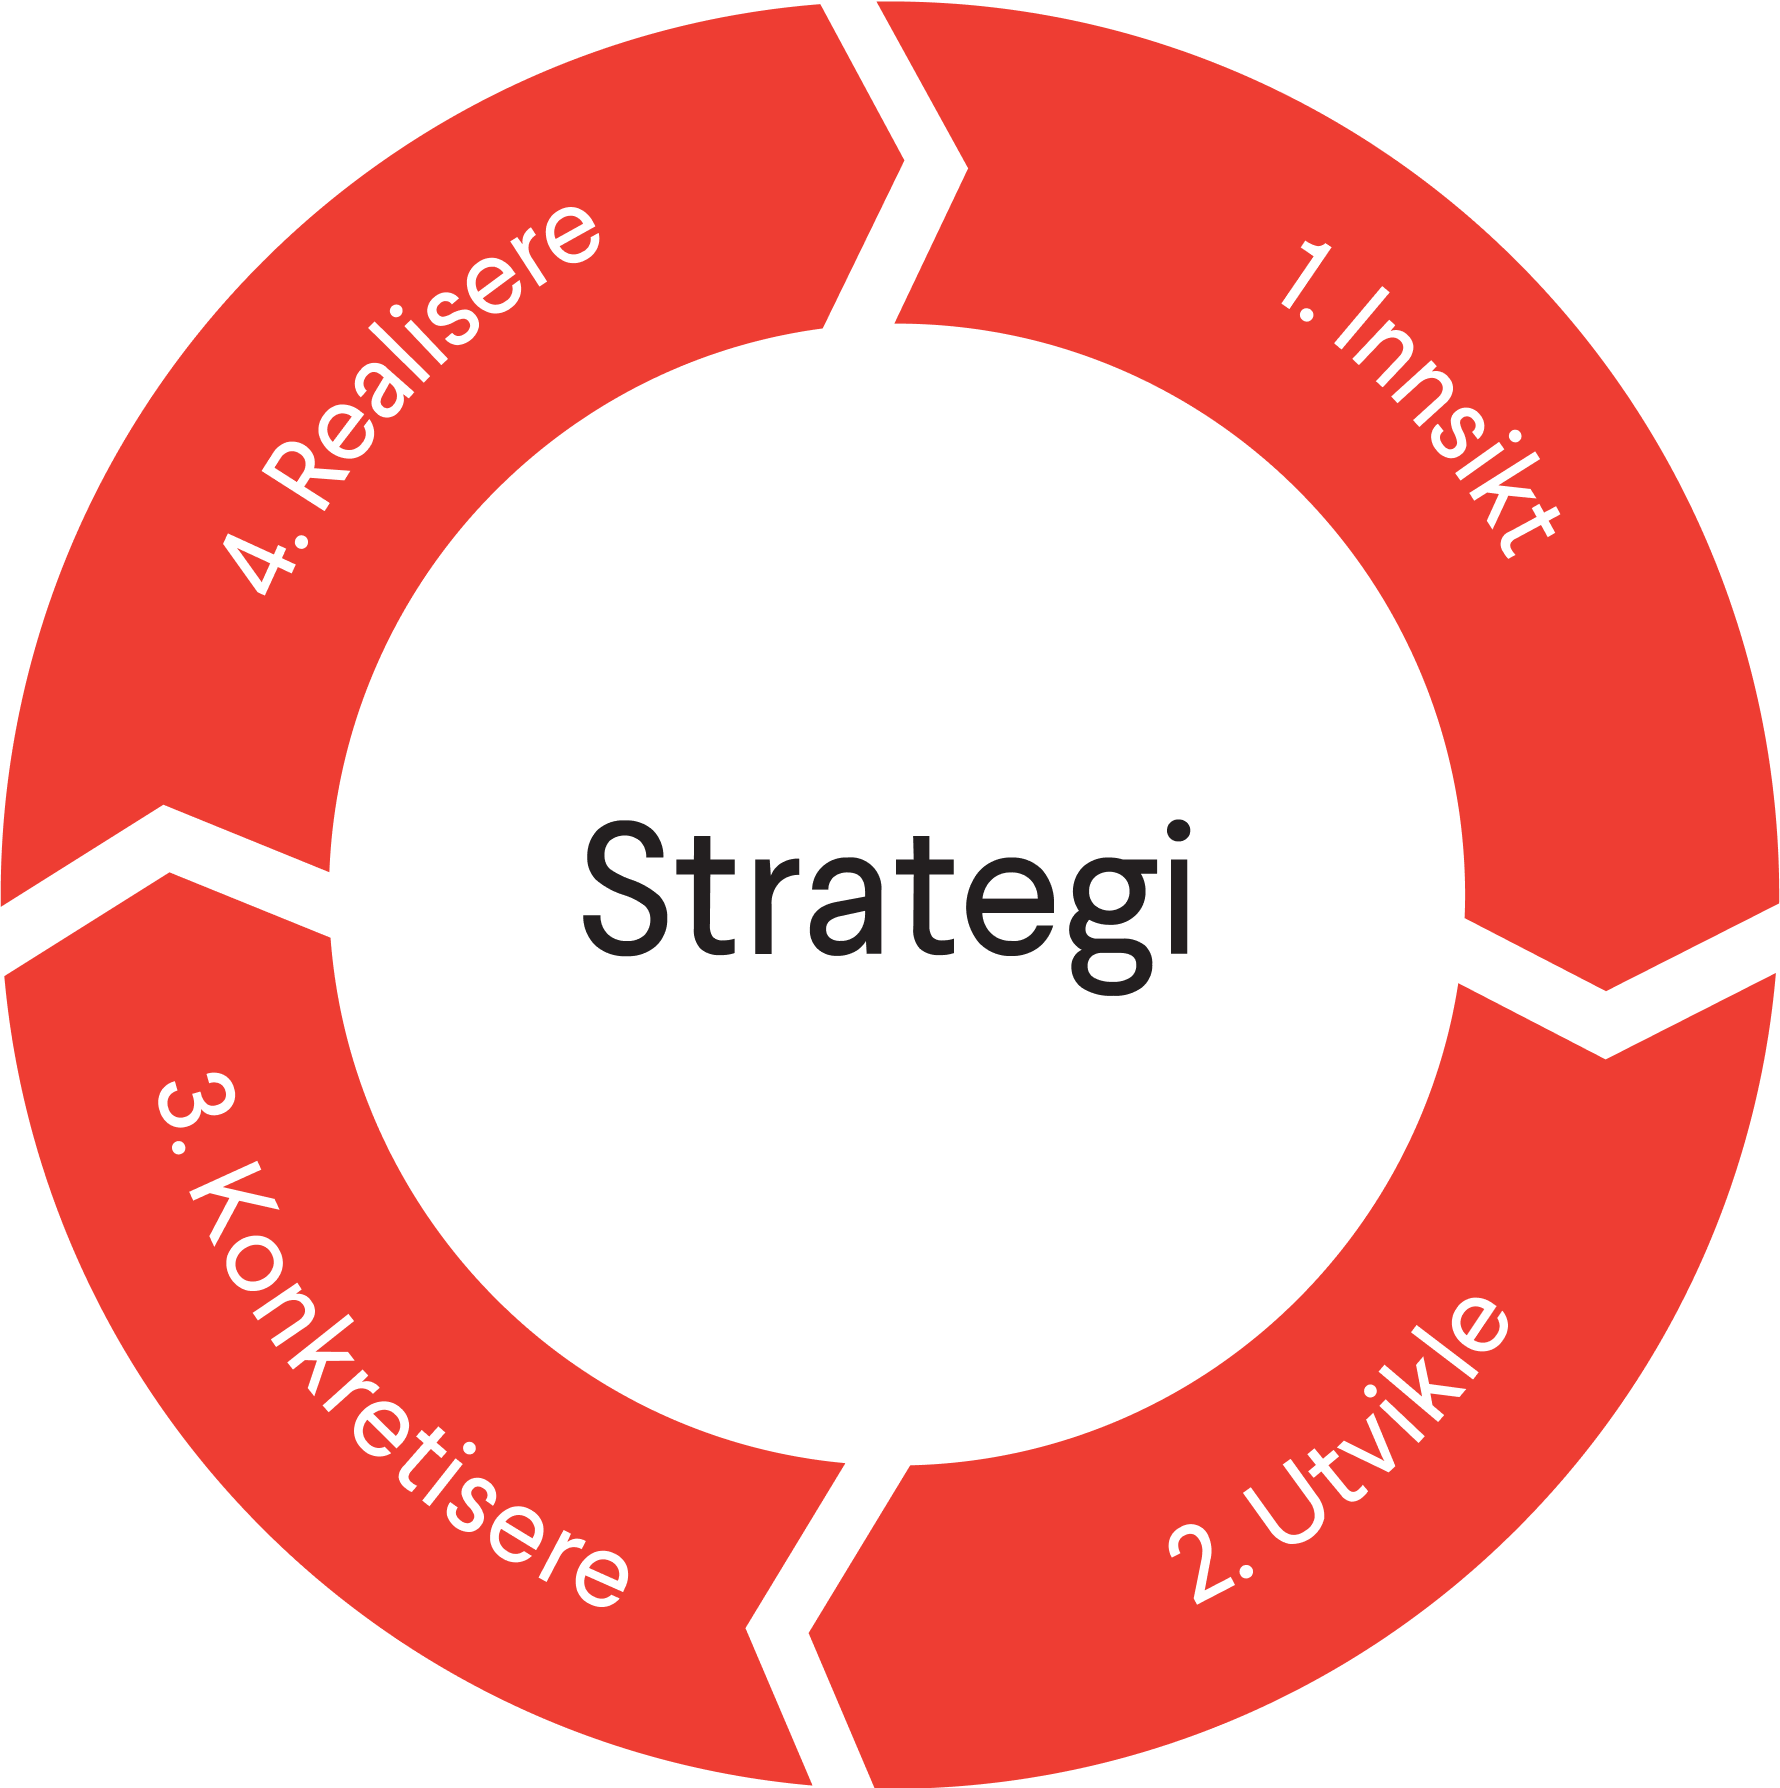 Strategi-hjul